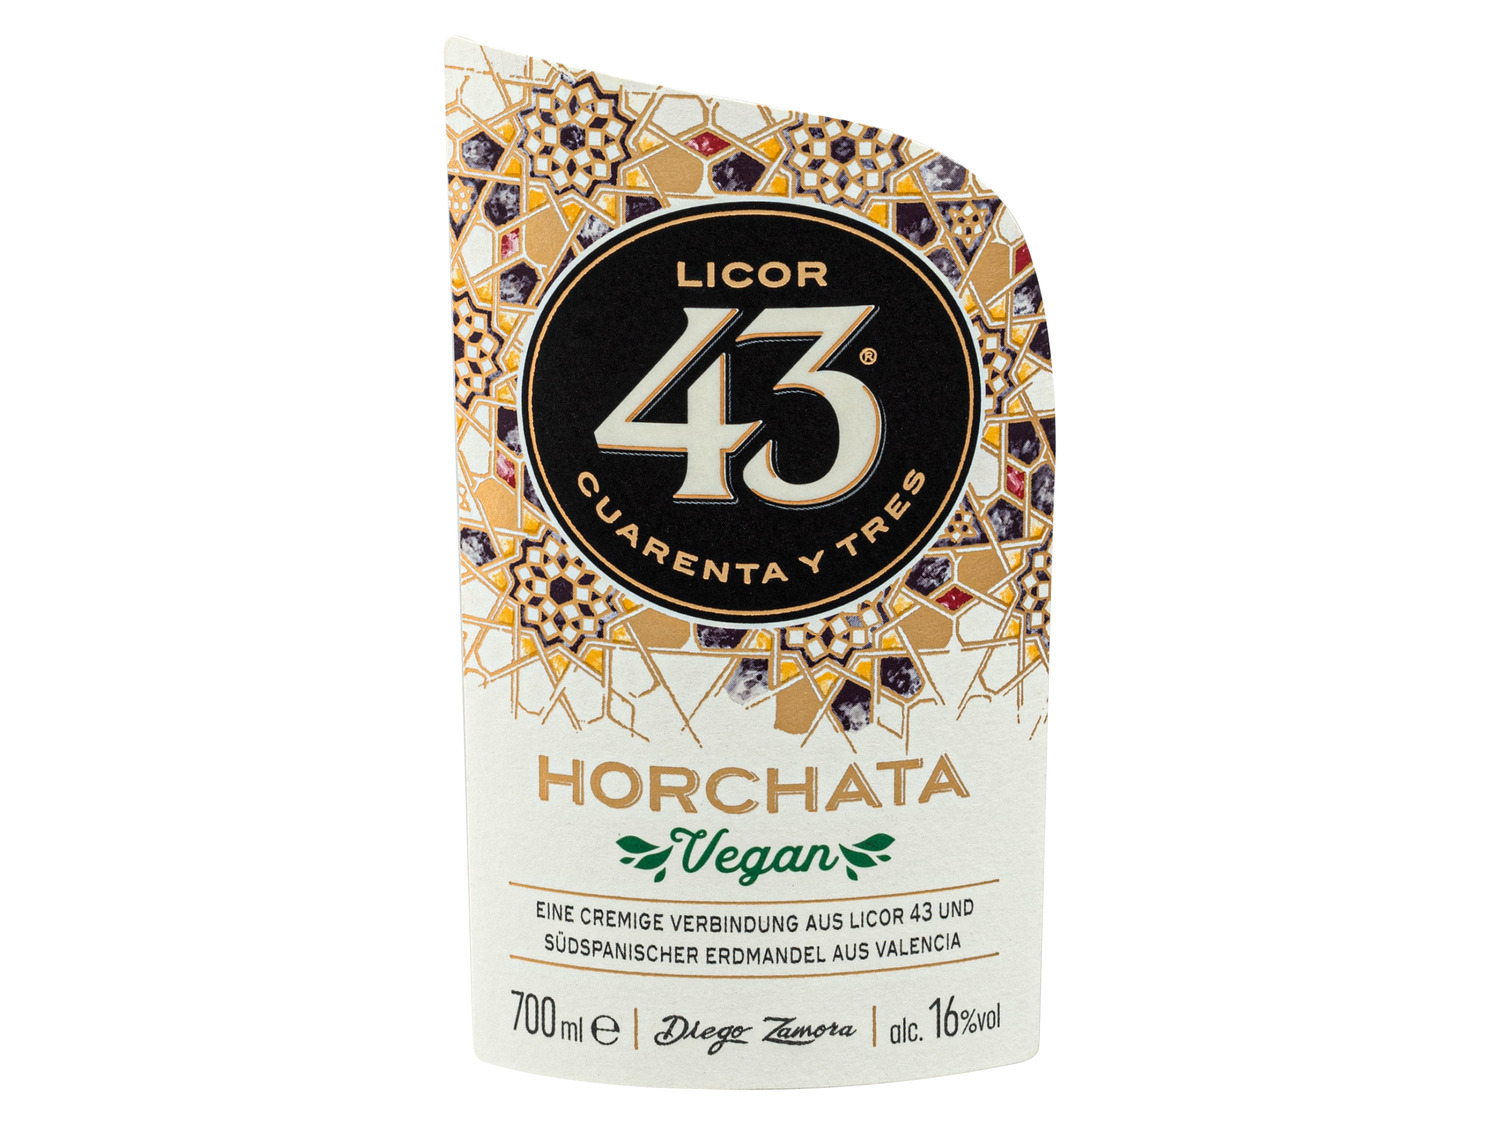 Licor 43 Horchata vegan 16% Vol online kaufen | LIDL